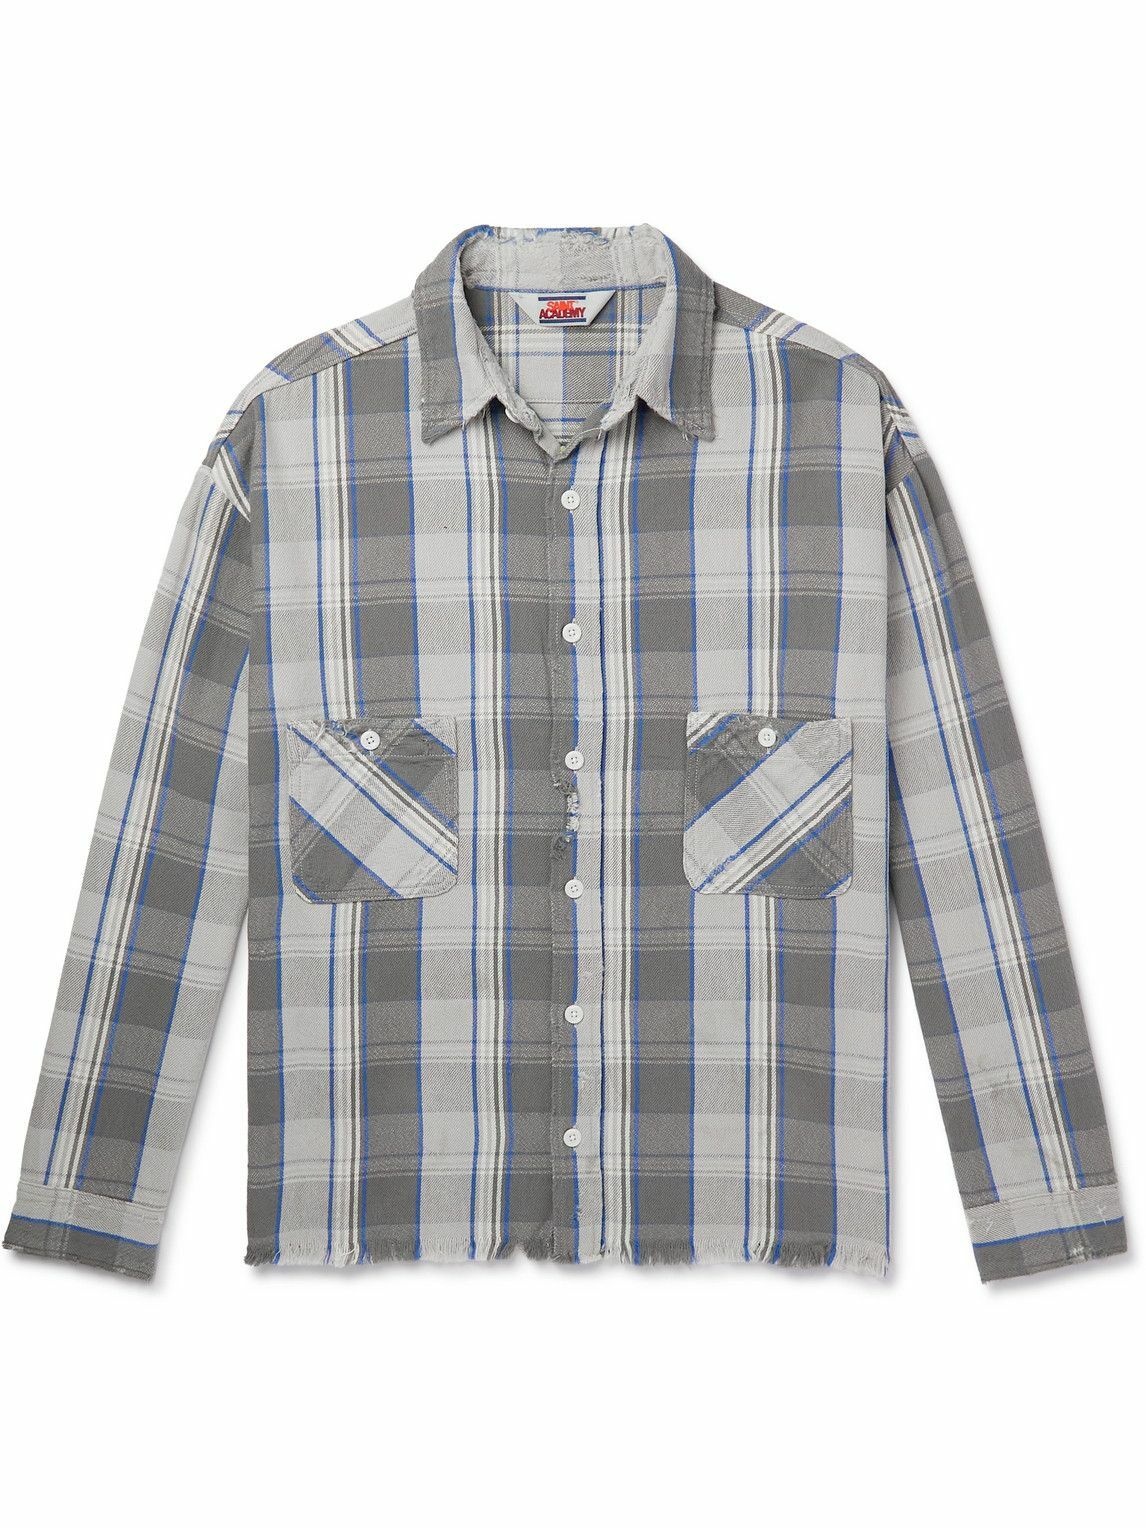 SAINT Mxxxxxx - Distressed Checked Cotton-Flannel Shirt - Blue